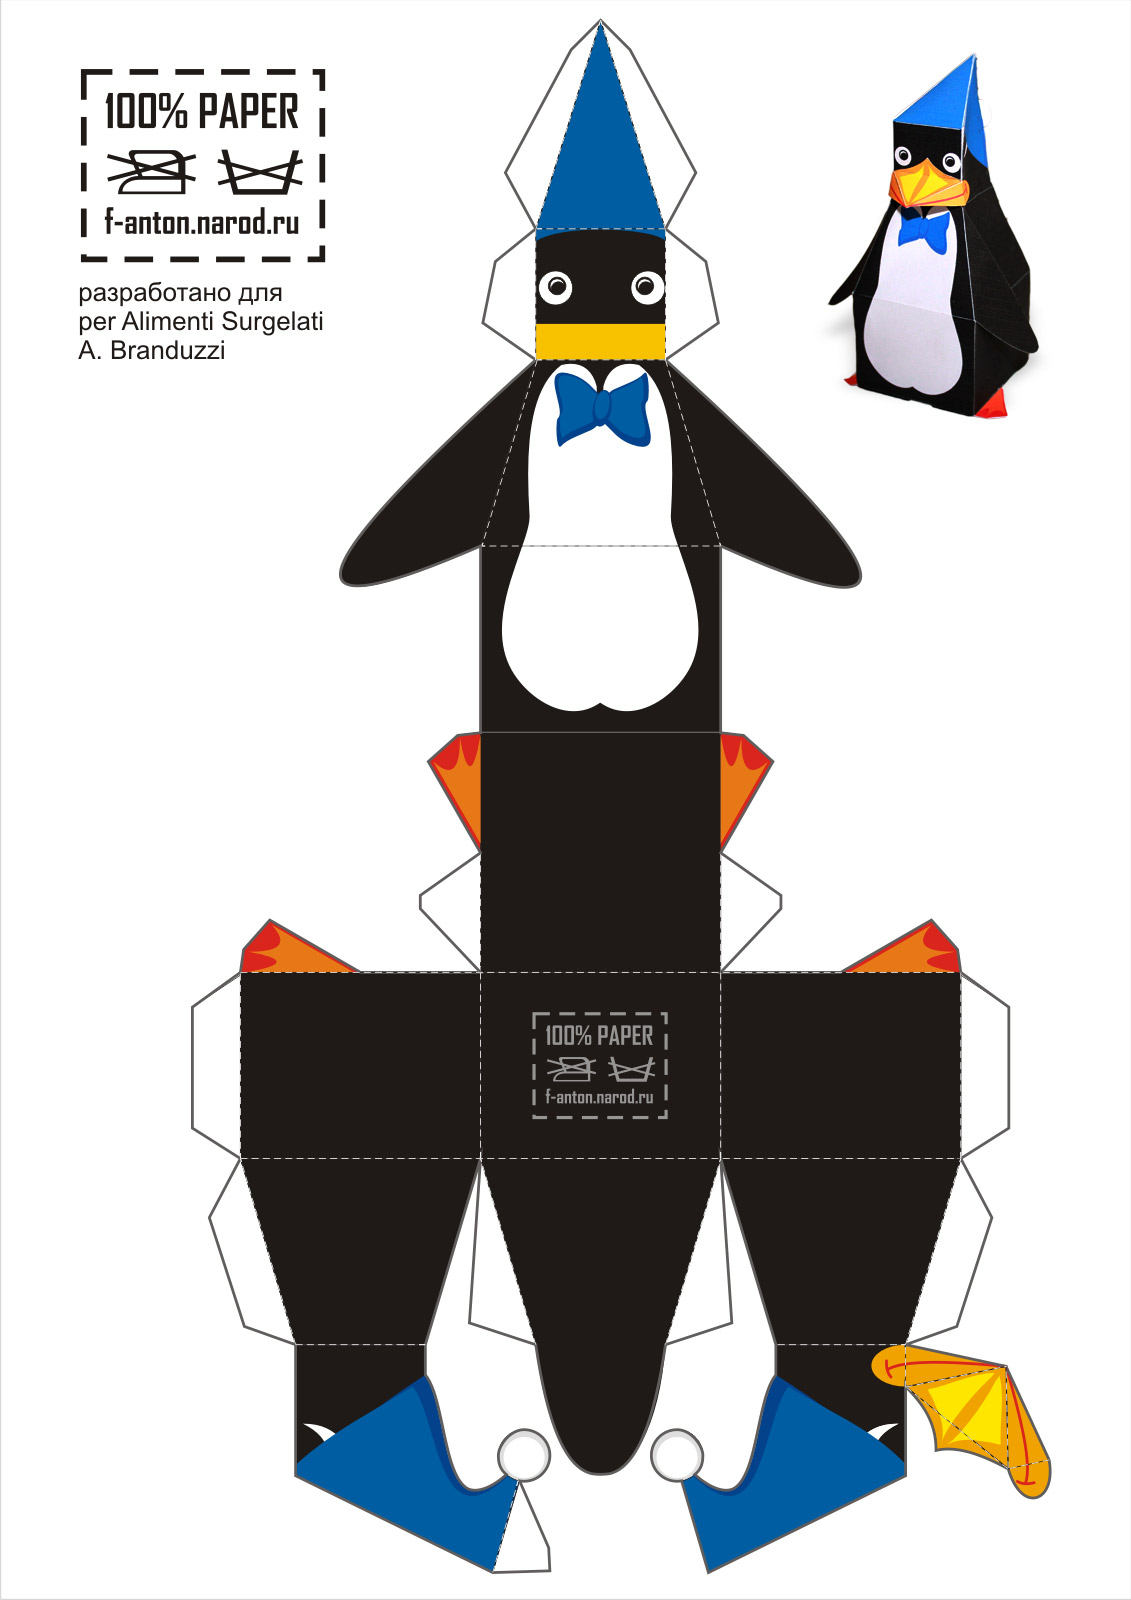 Penguin paper model - Free printable paper models by Anton Filonov